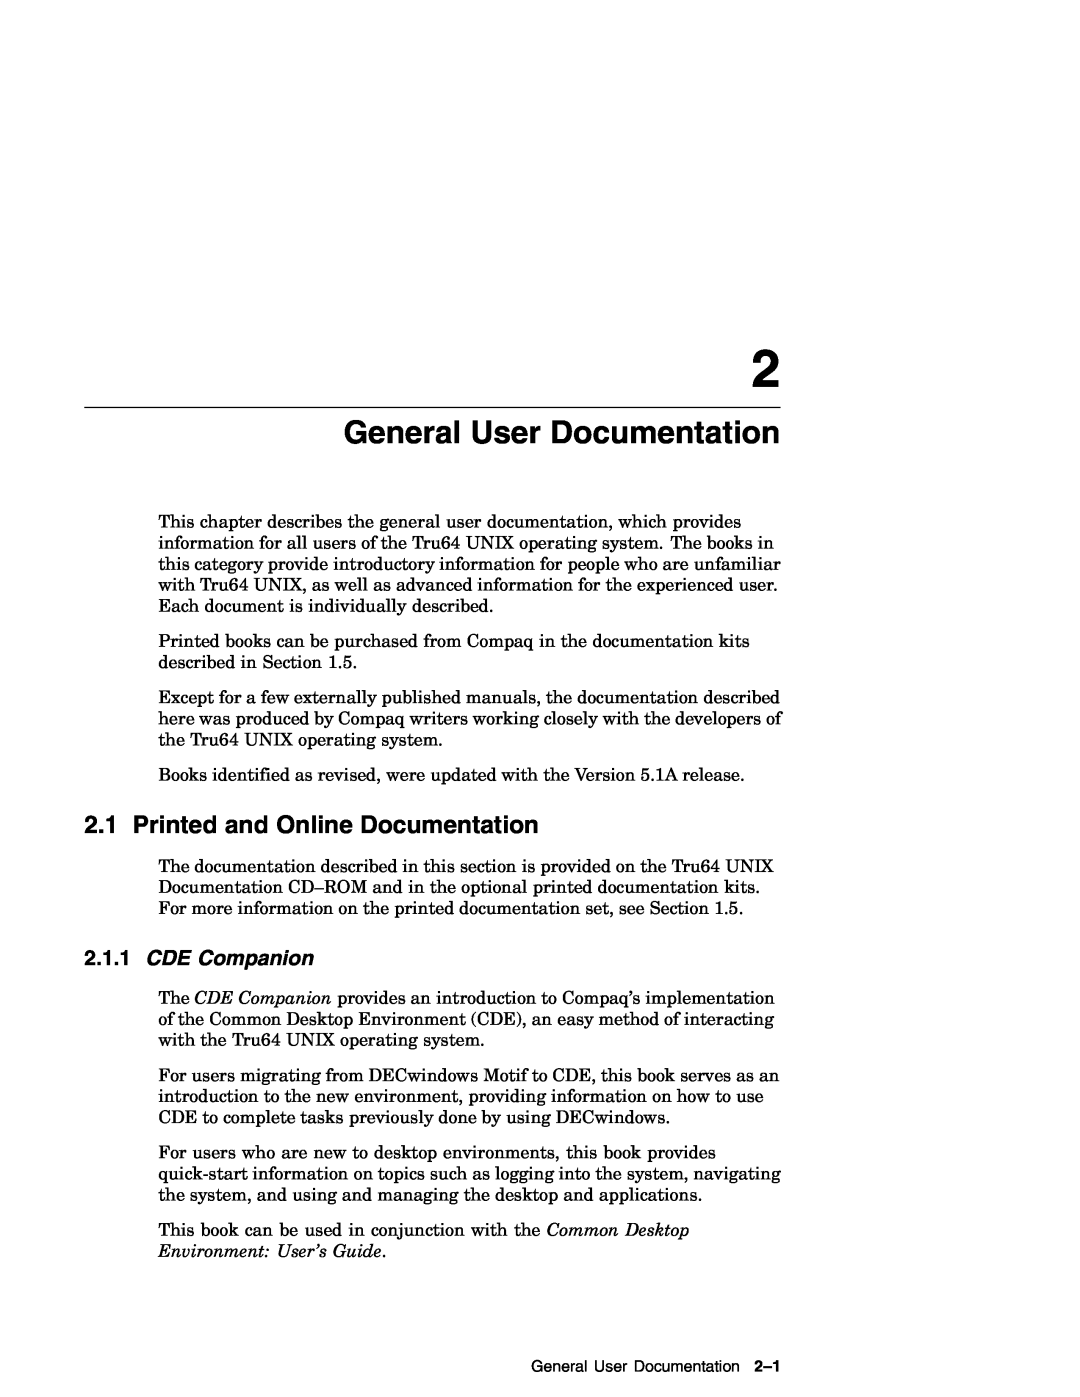 Compaq AA-RH8RD-TE manual General User Documentation, Printed and Online Documentation, CDE Companion 